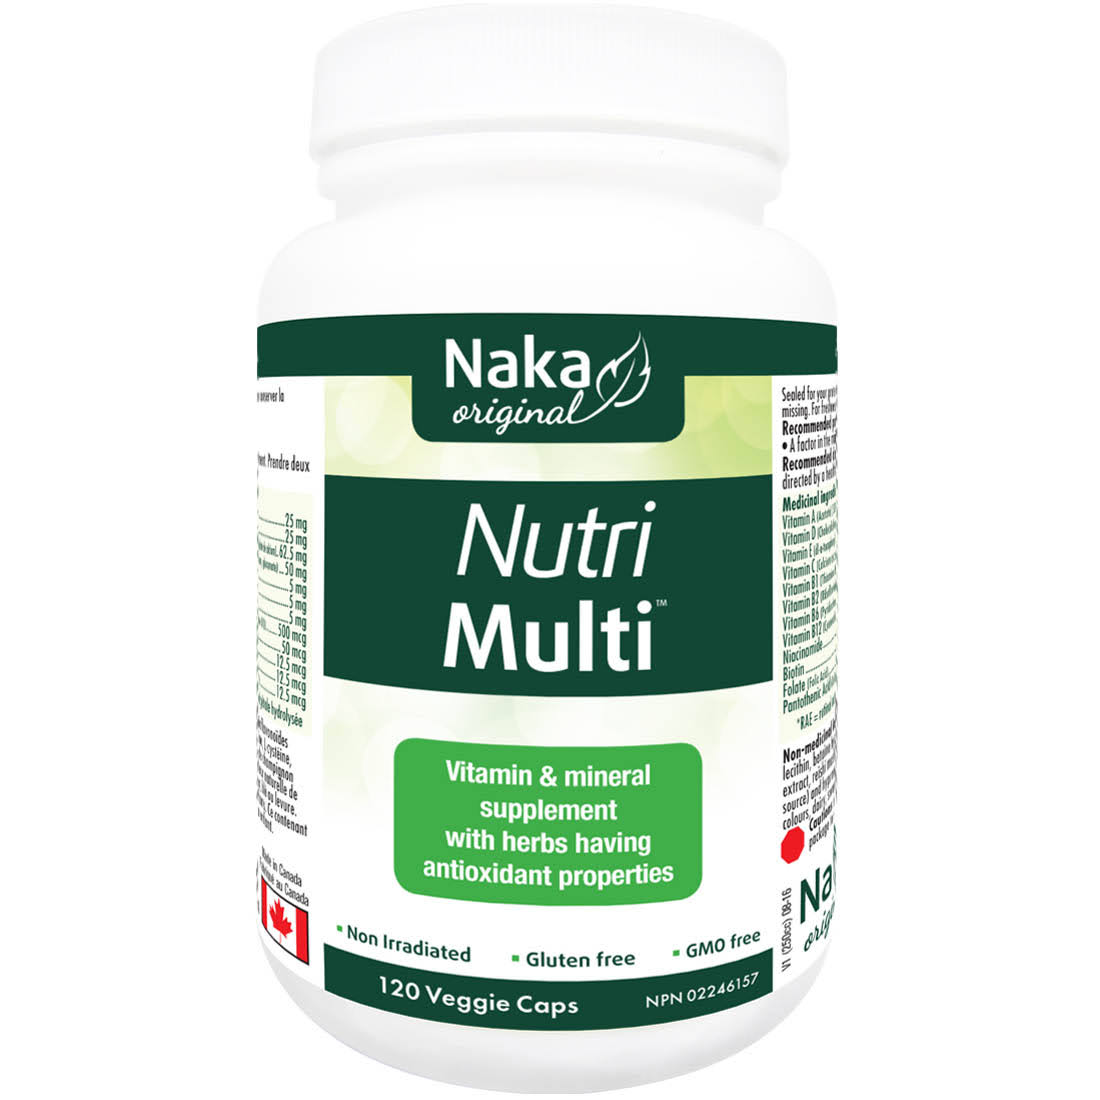 National Nutrition - Nutri Multi - 120 Vcaps + 30 Vcaps Bonus Size!